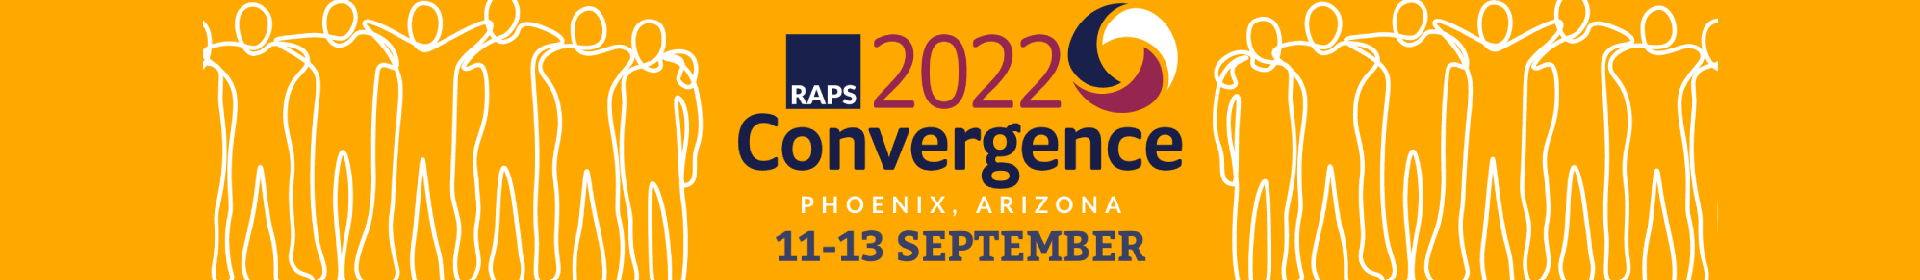 RAPS Convergence 2022 Event Banner